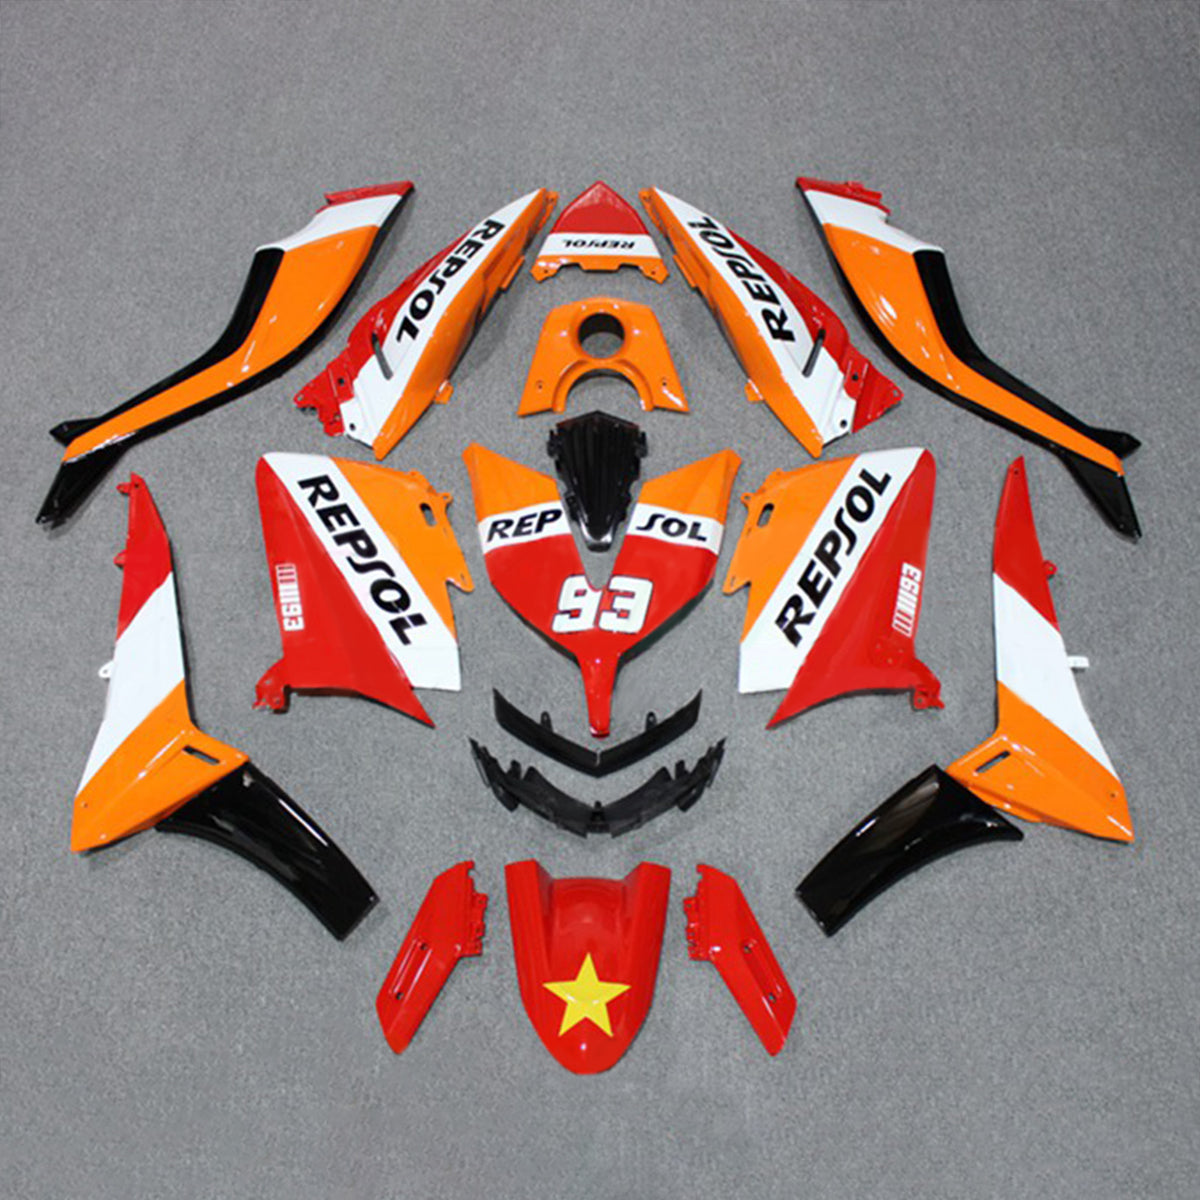 Amotopart 2015-2016 Yamaha T-Max TMAX530 Carena Kit Repjol Arancione e Rosso